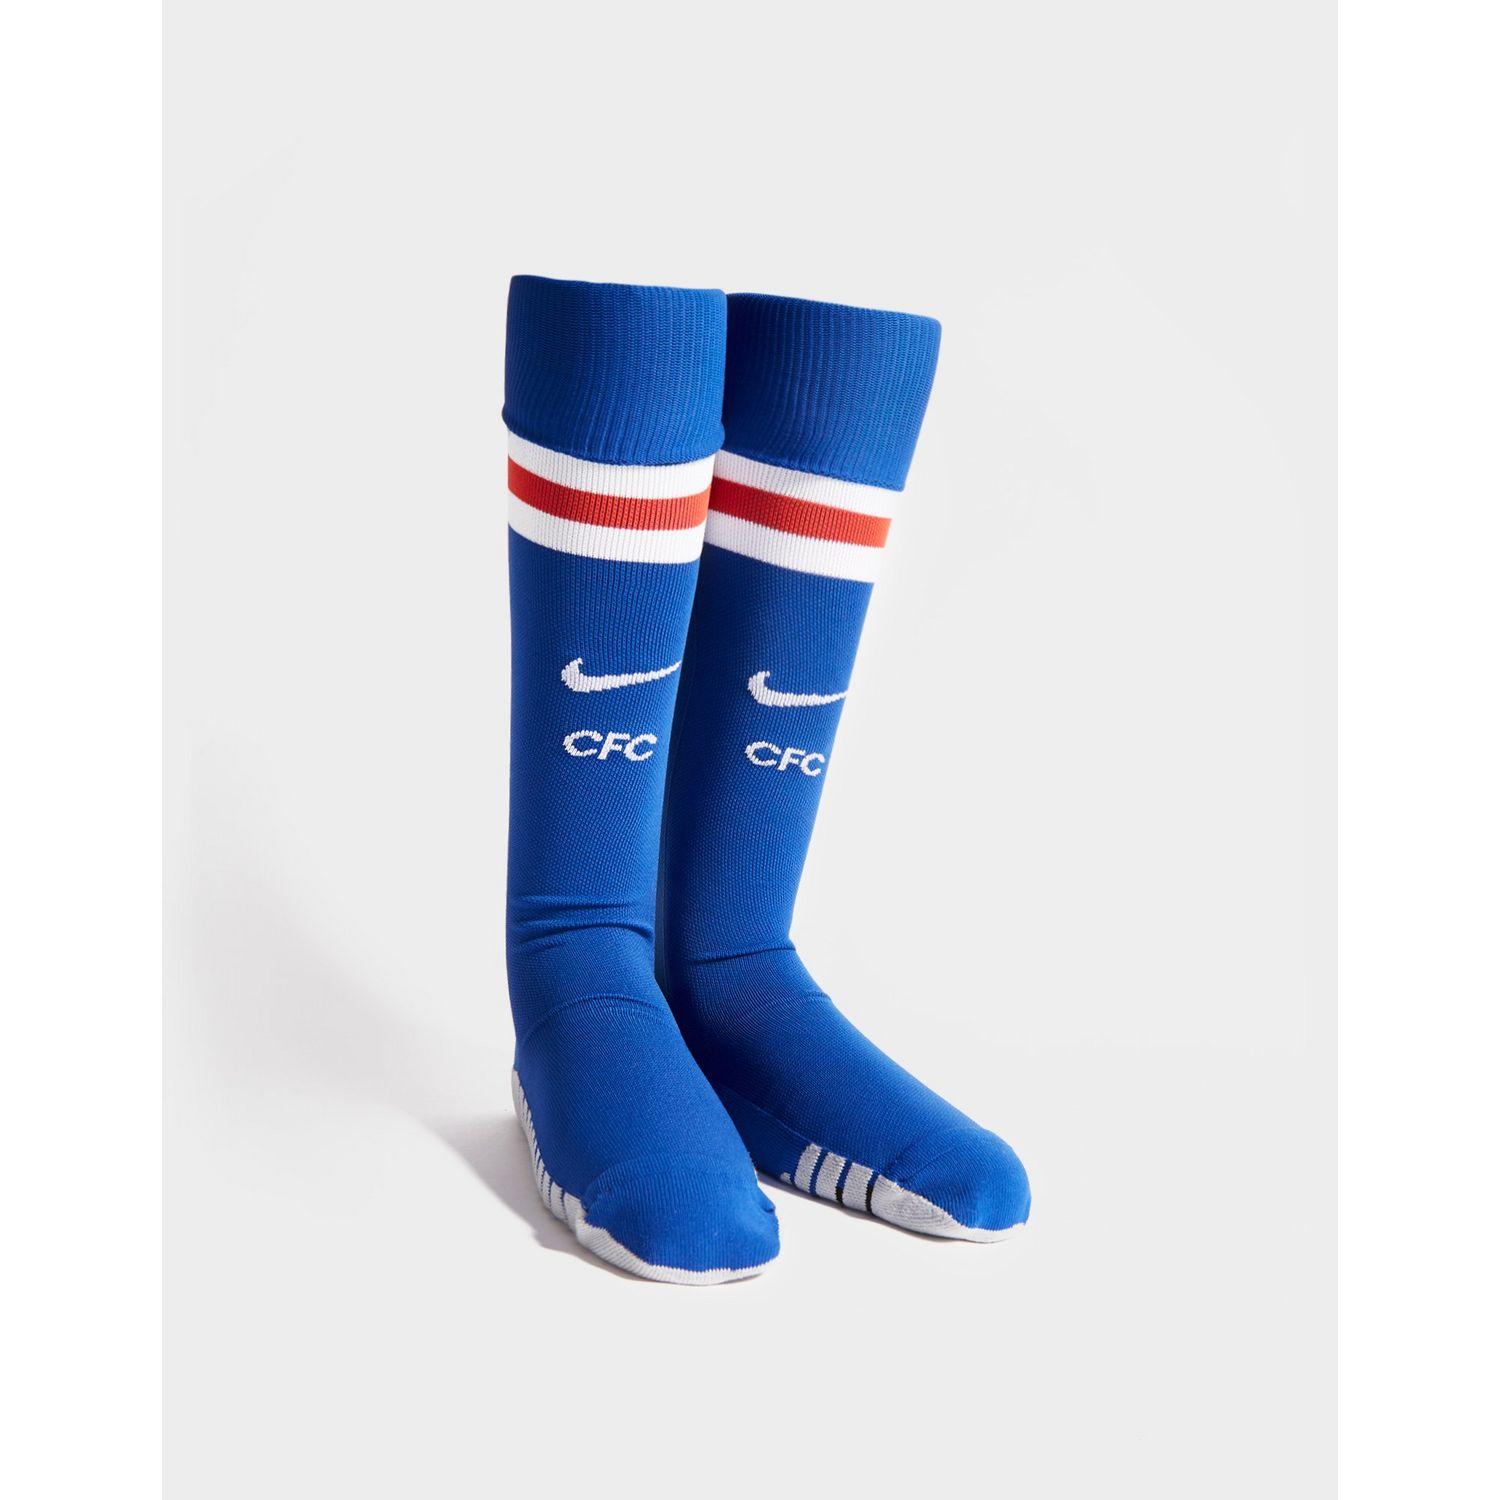 Nike Synthetic Chelsea Fc 2019/20 Away Socks in Blue for Men - Lyst